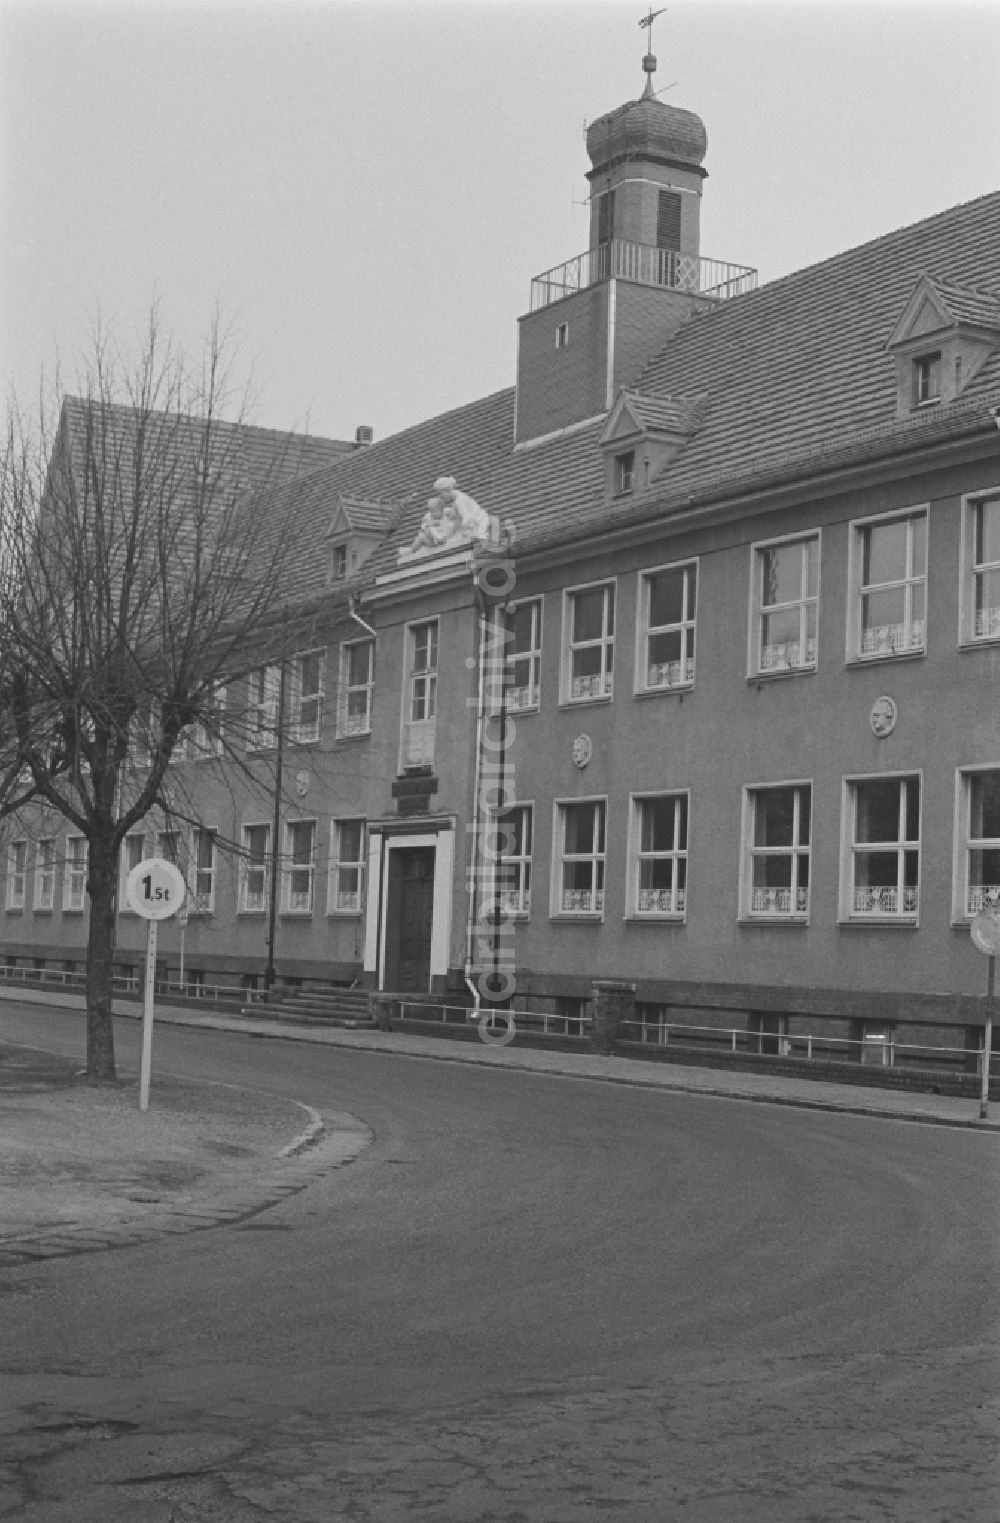 DDR-Fotoarchiv: Laubusch - Oberschule OS Dr. Richard Sorge in Laubusch in Sachsen in der DDR